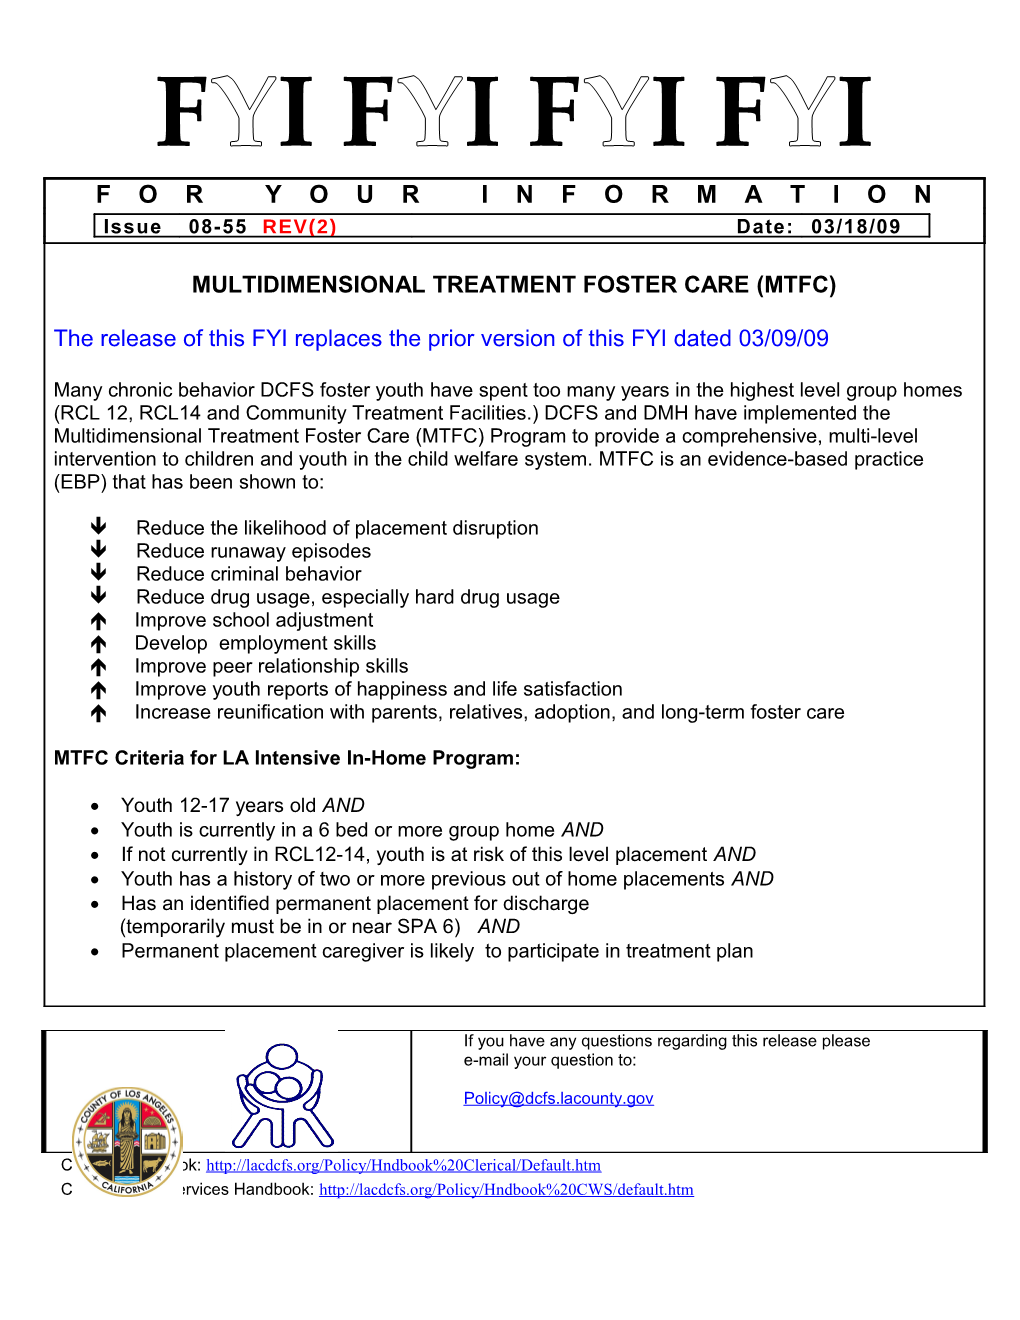 FYI 08-55, Multidimensional Treatment Foster Care (MTFC)